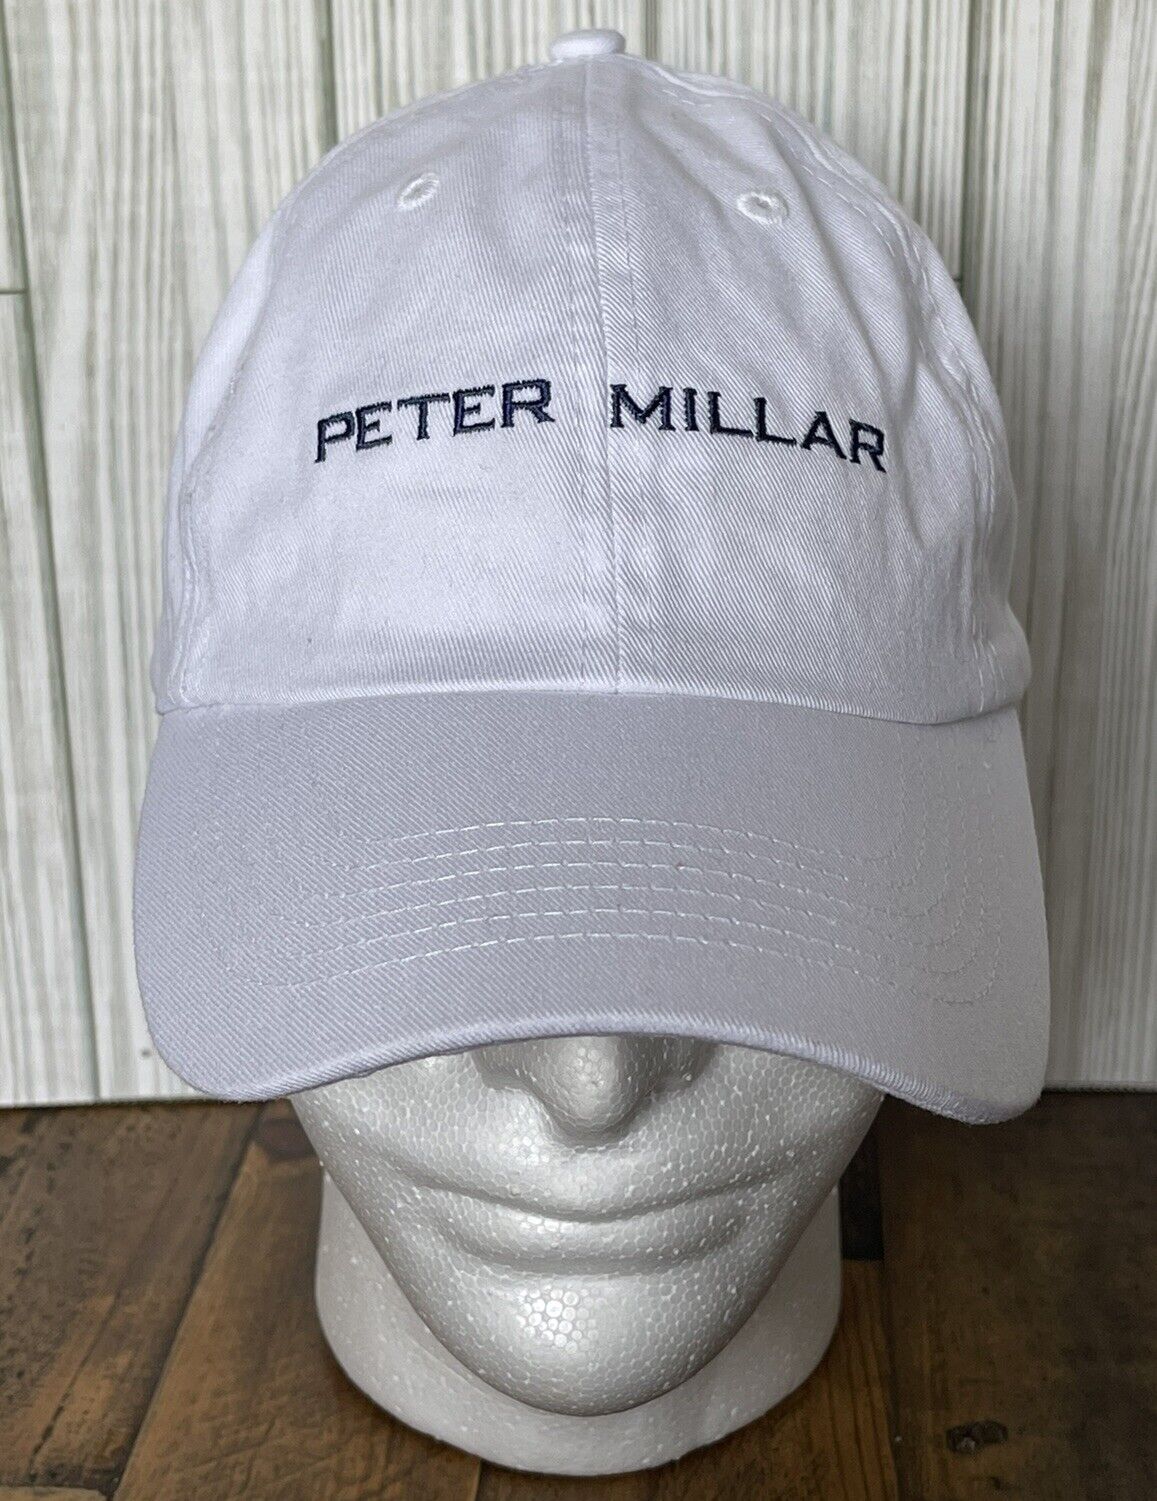 Peter Millar Embroidered Adjustable Strap back White Hat Cap ⛳️